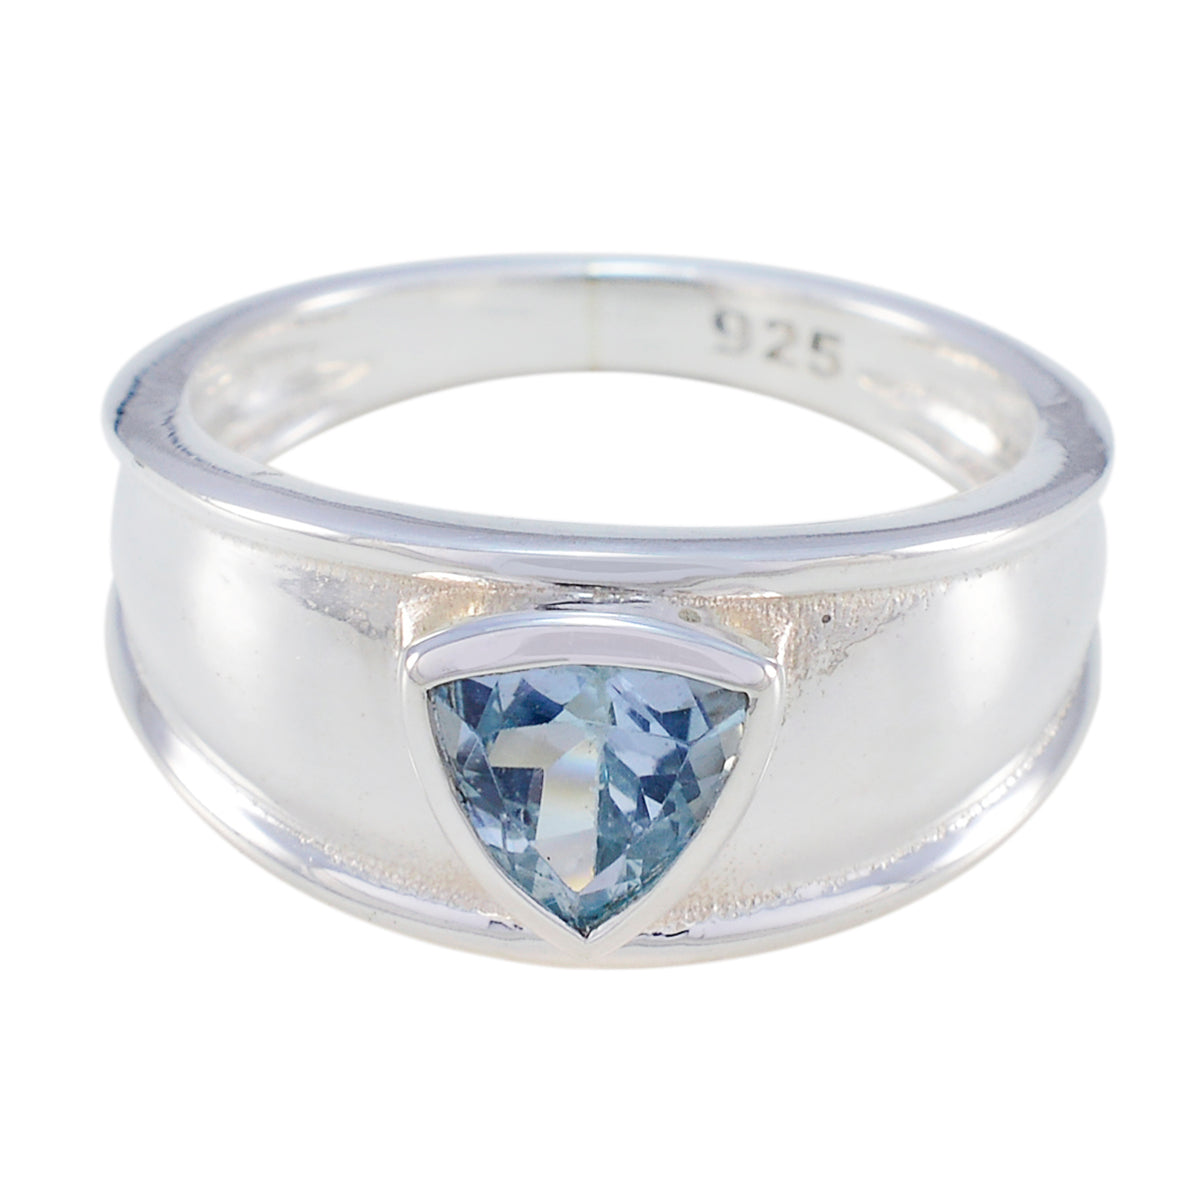 Riyo Bewitching Gems Blue Topaz 925 Rings Nose Piercing Jewelry